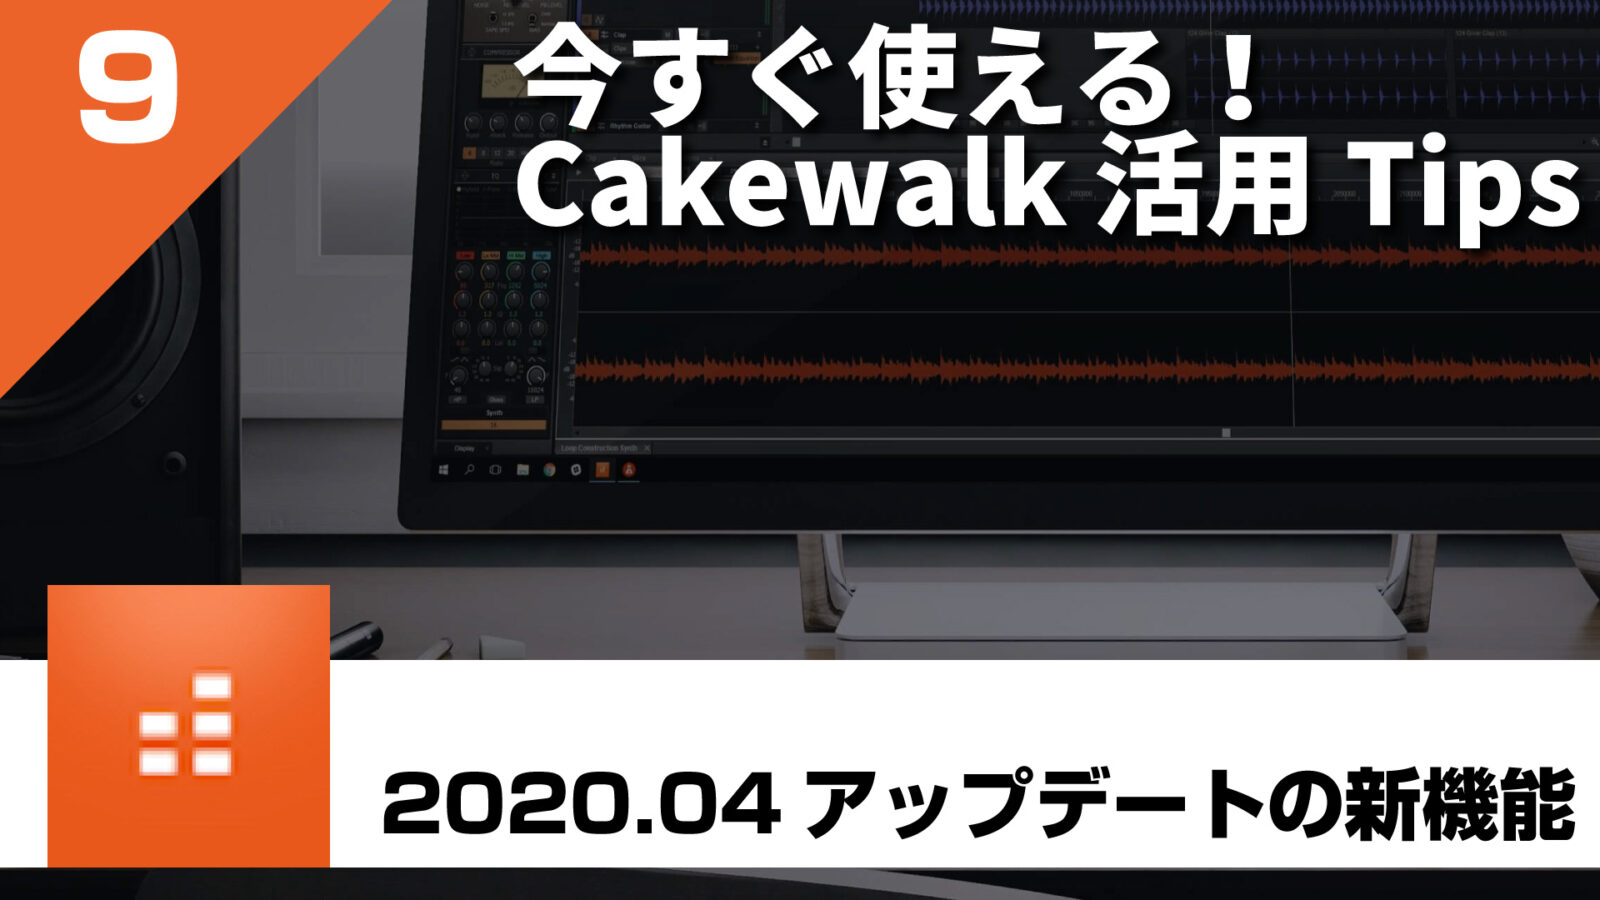 Cakewalk 活用 Tips 第9回 04アップデートで追加された新機能